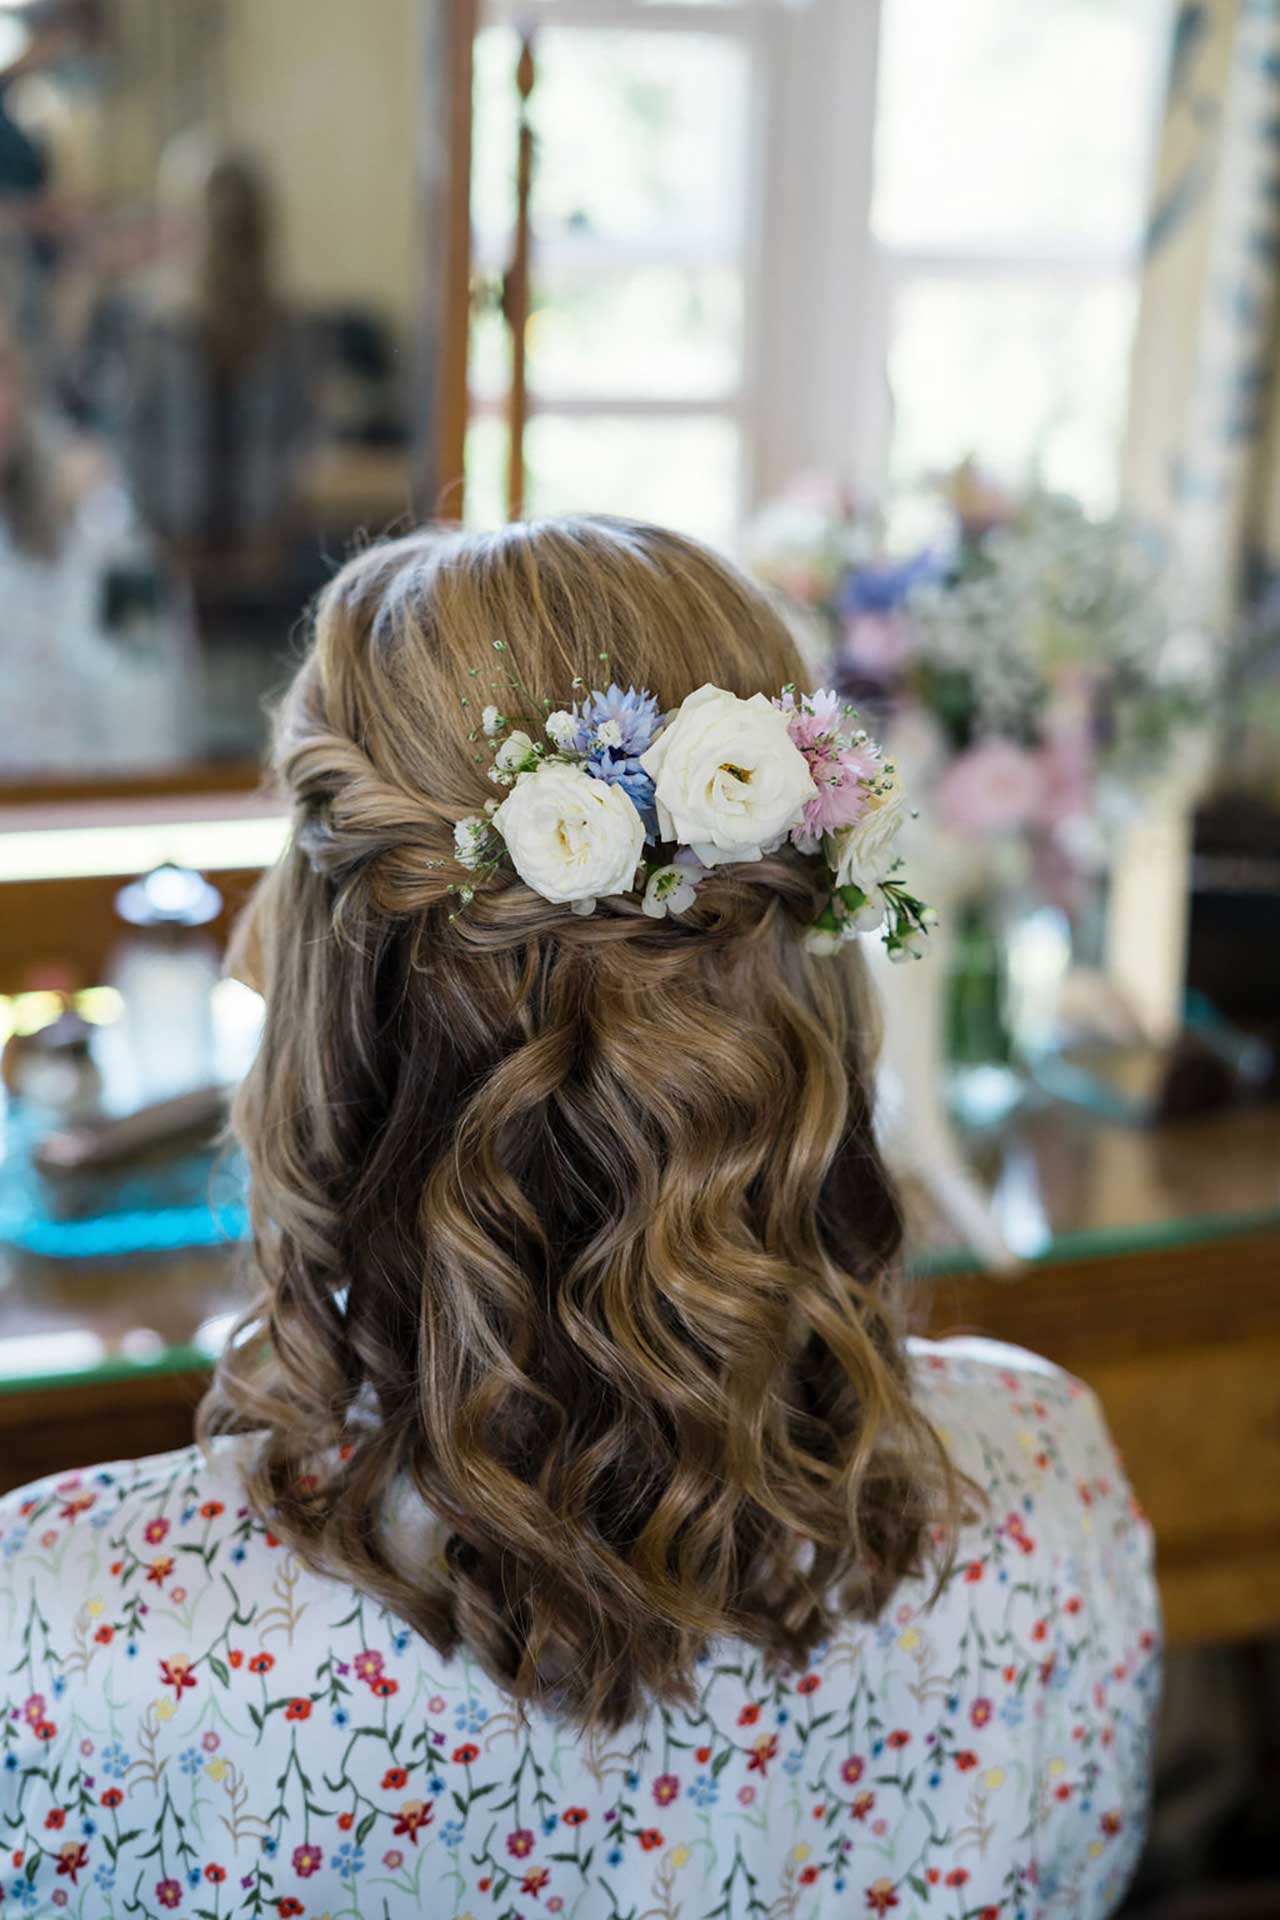 Herefordshire wedding - wedding hair flowers